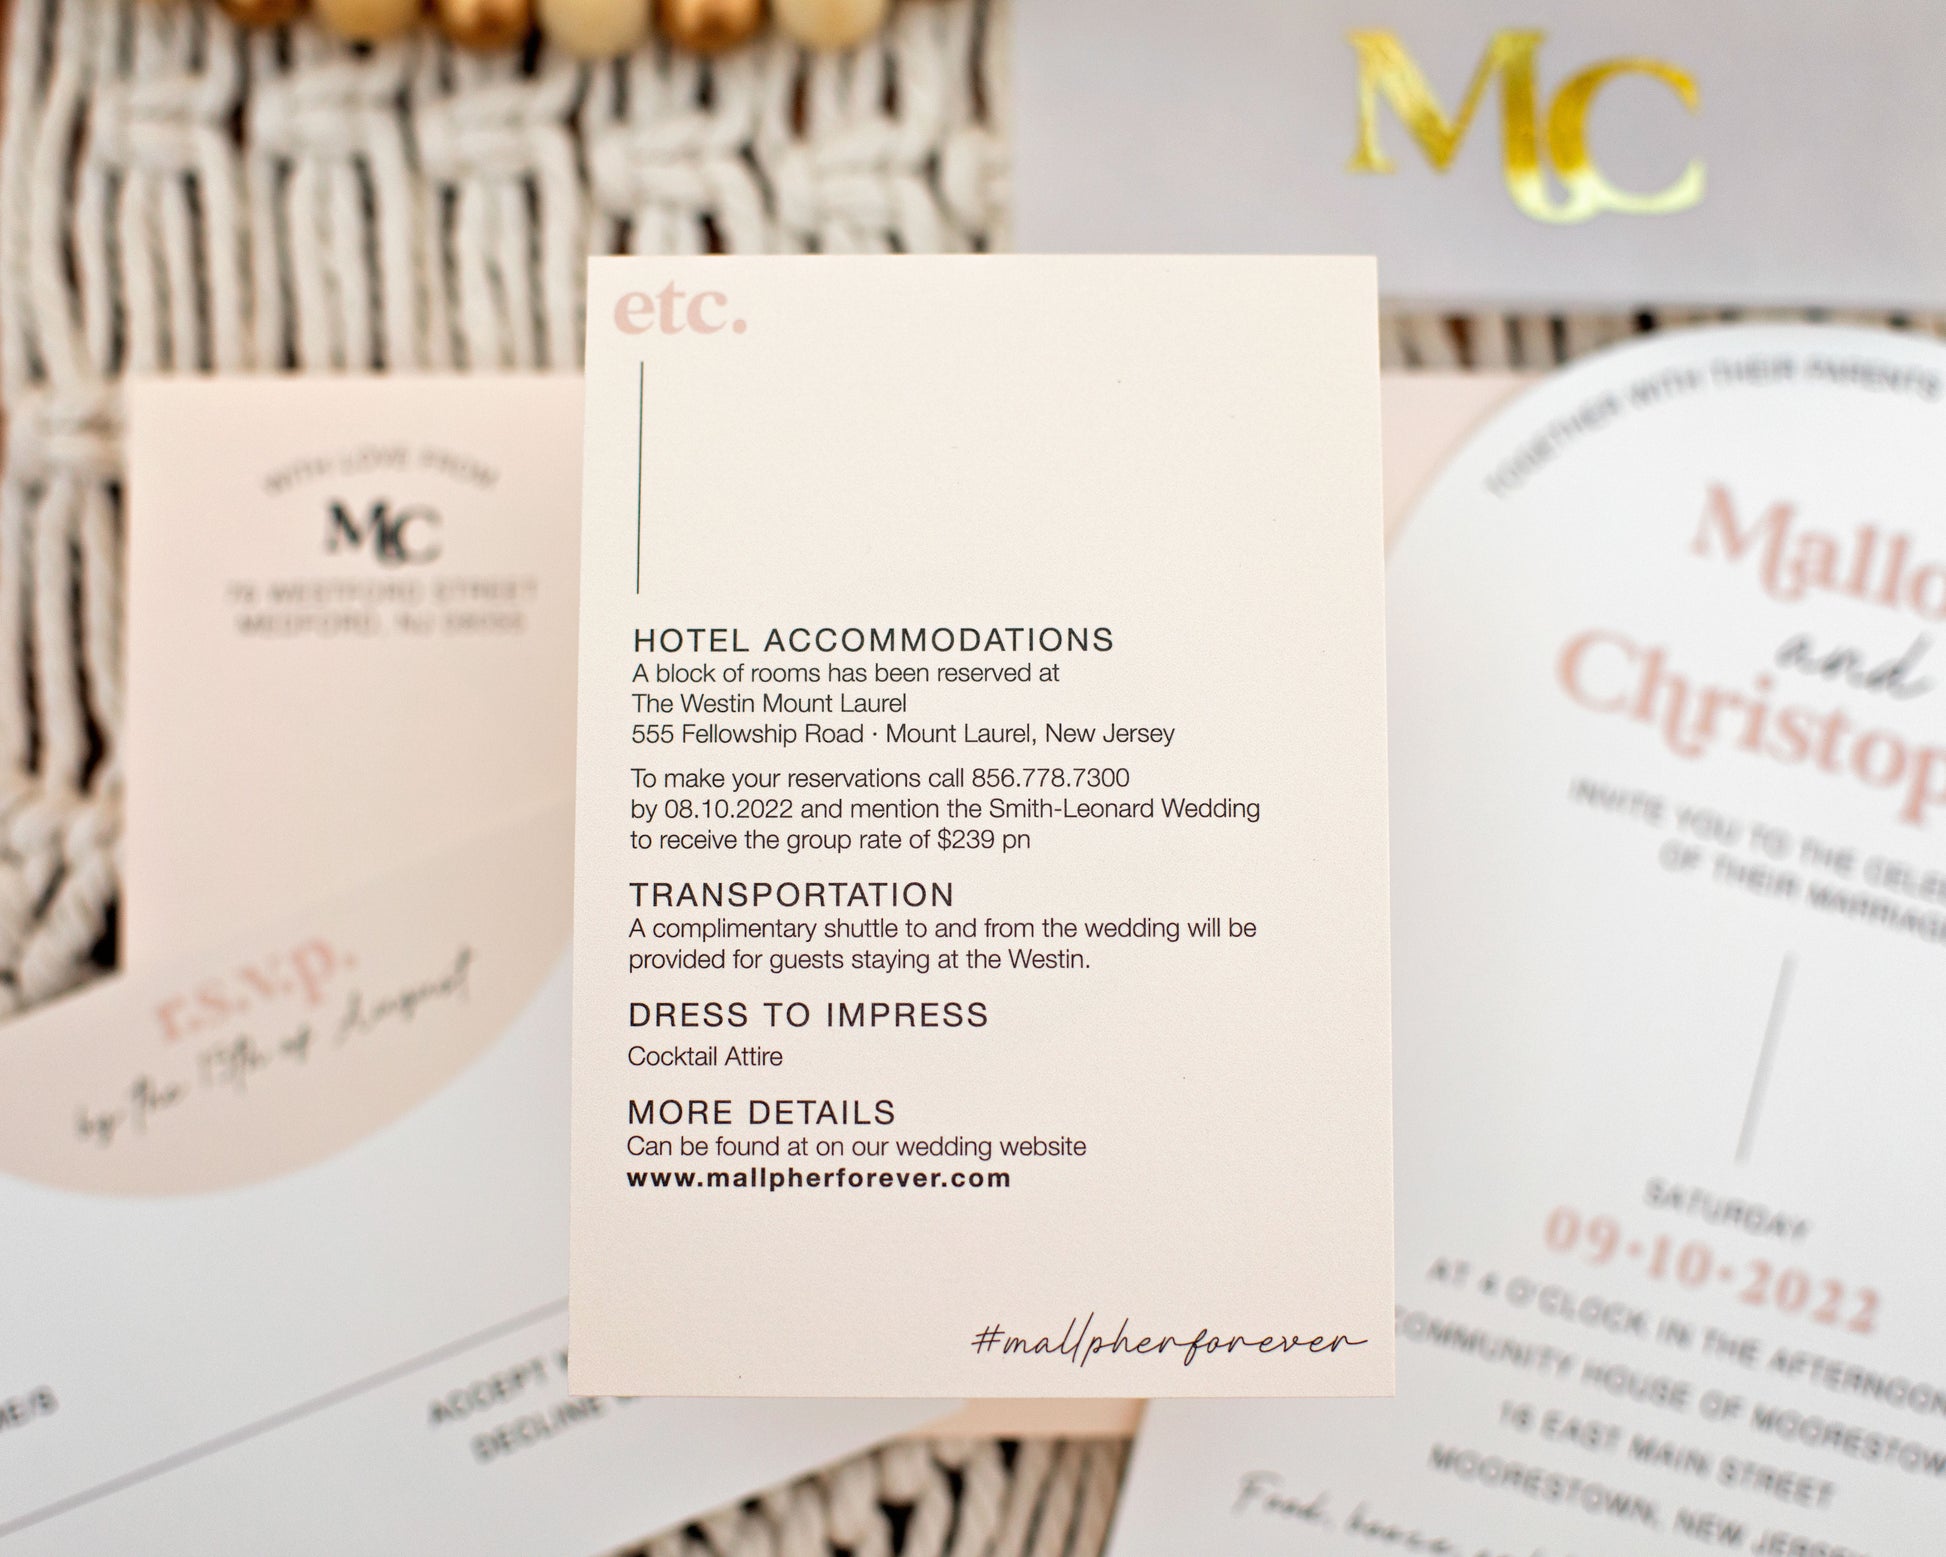 Details card for wedding invitation